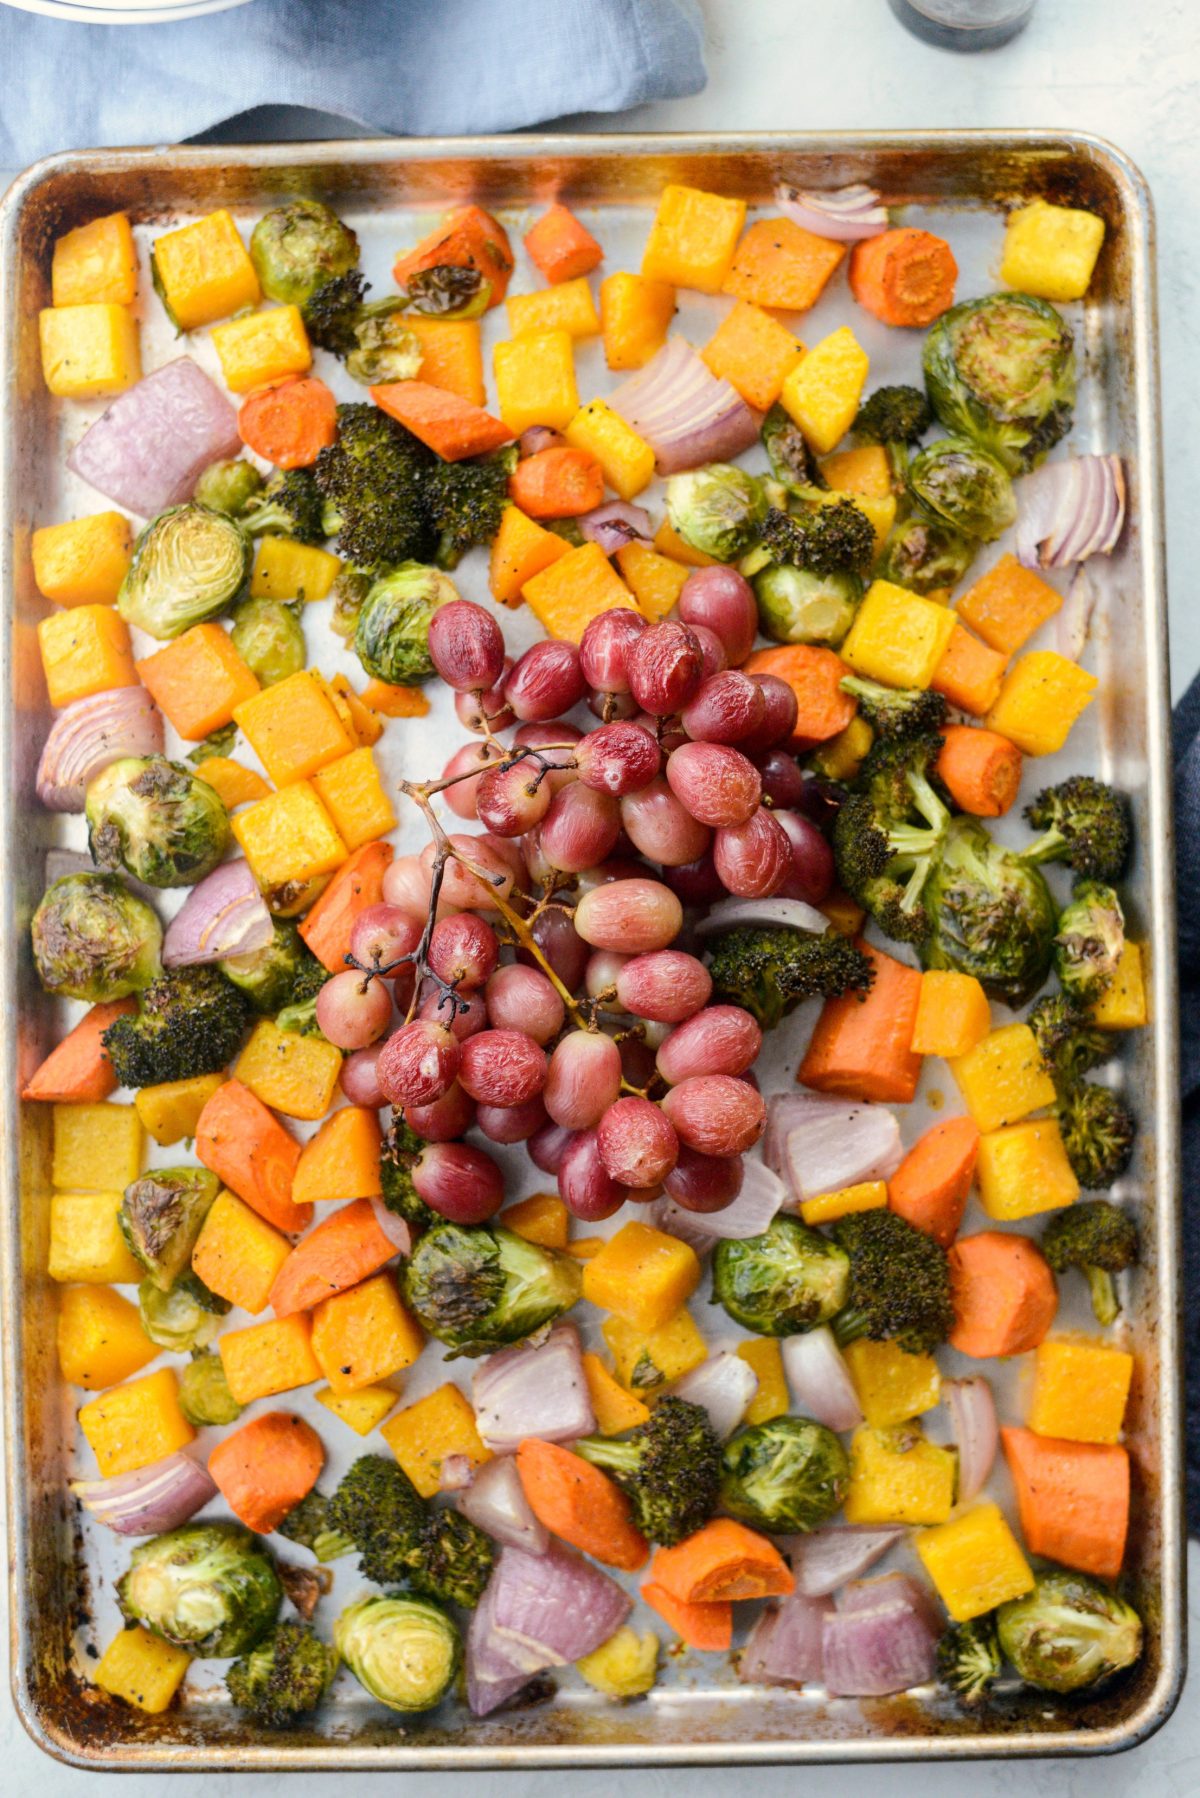 sheet pan of roasted veggies and grapes